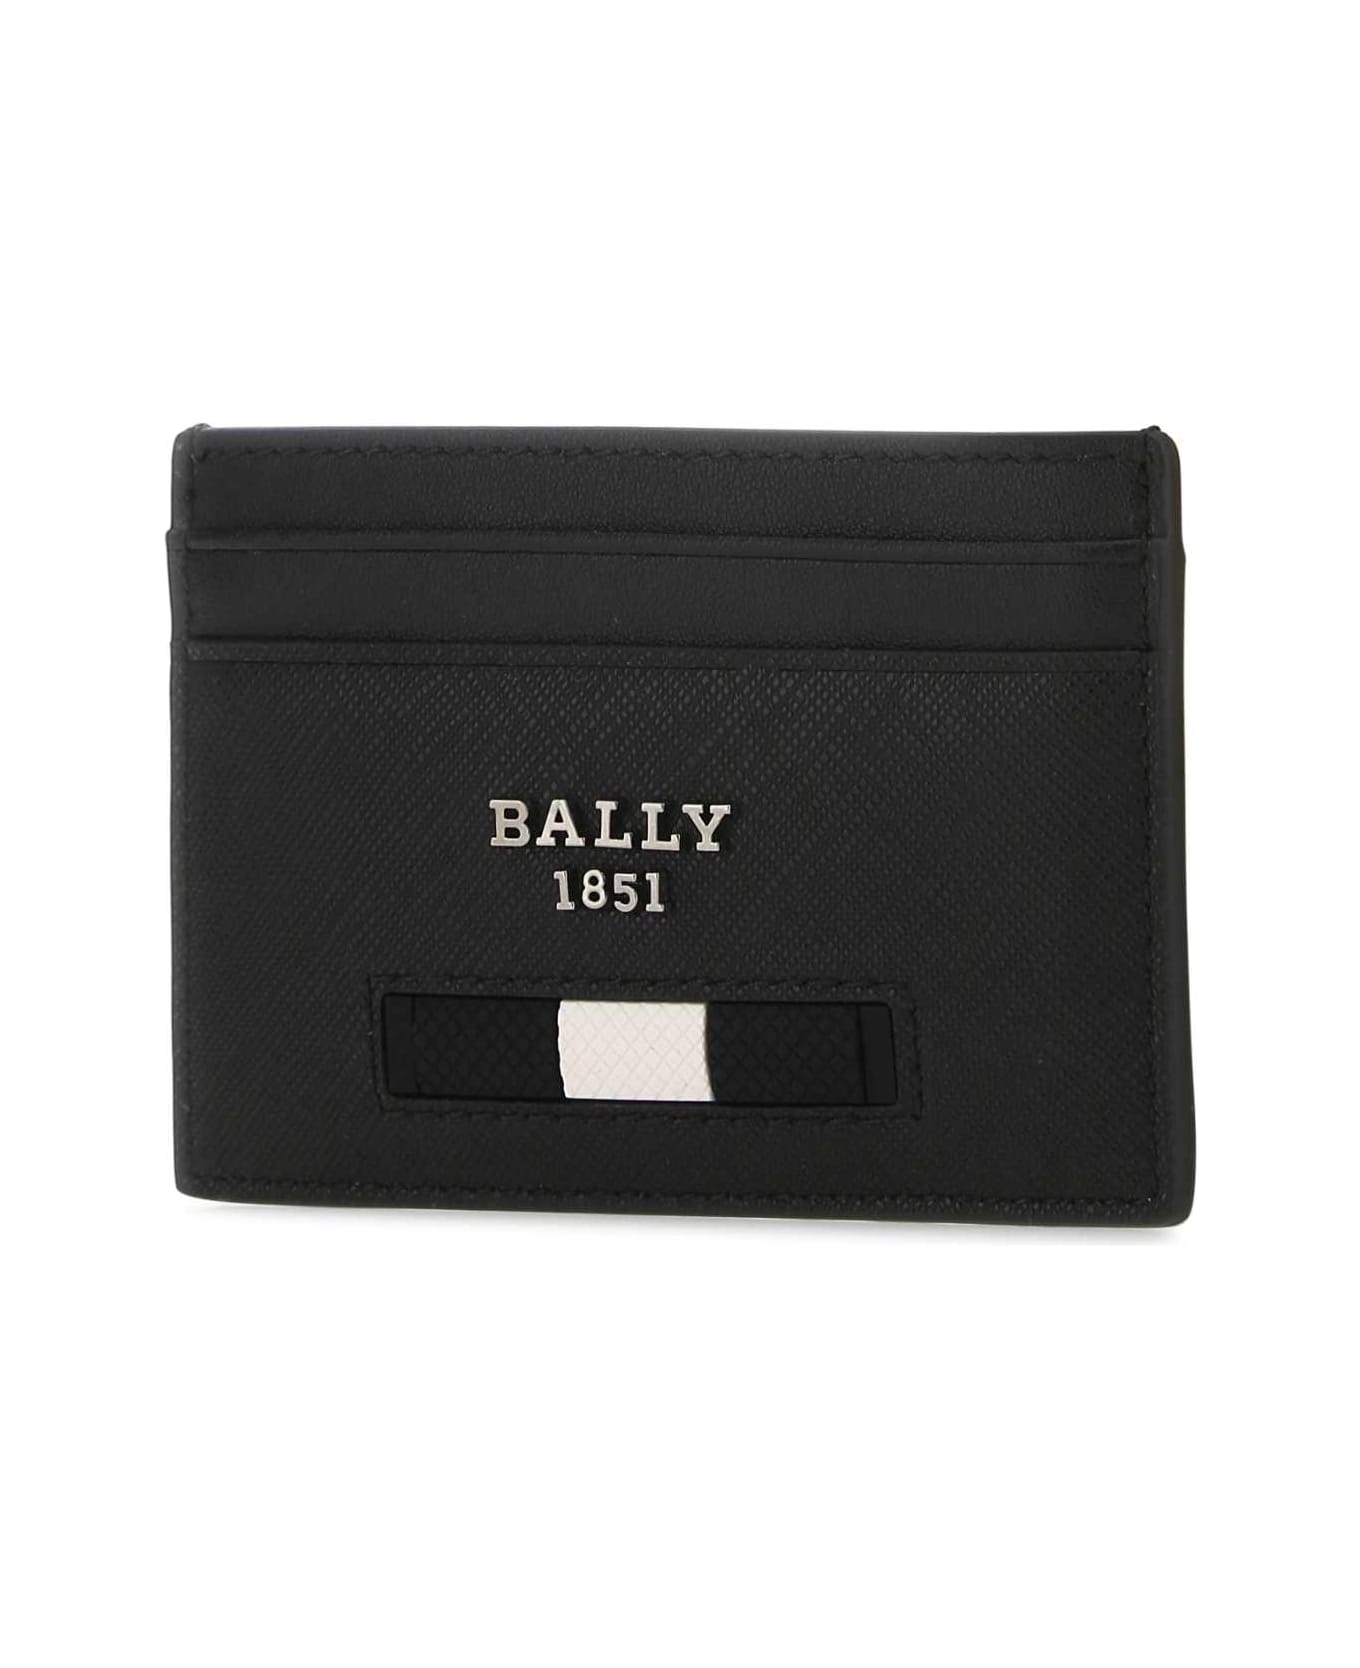 Bally Black Leather Card Holder - F100 財布